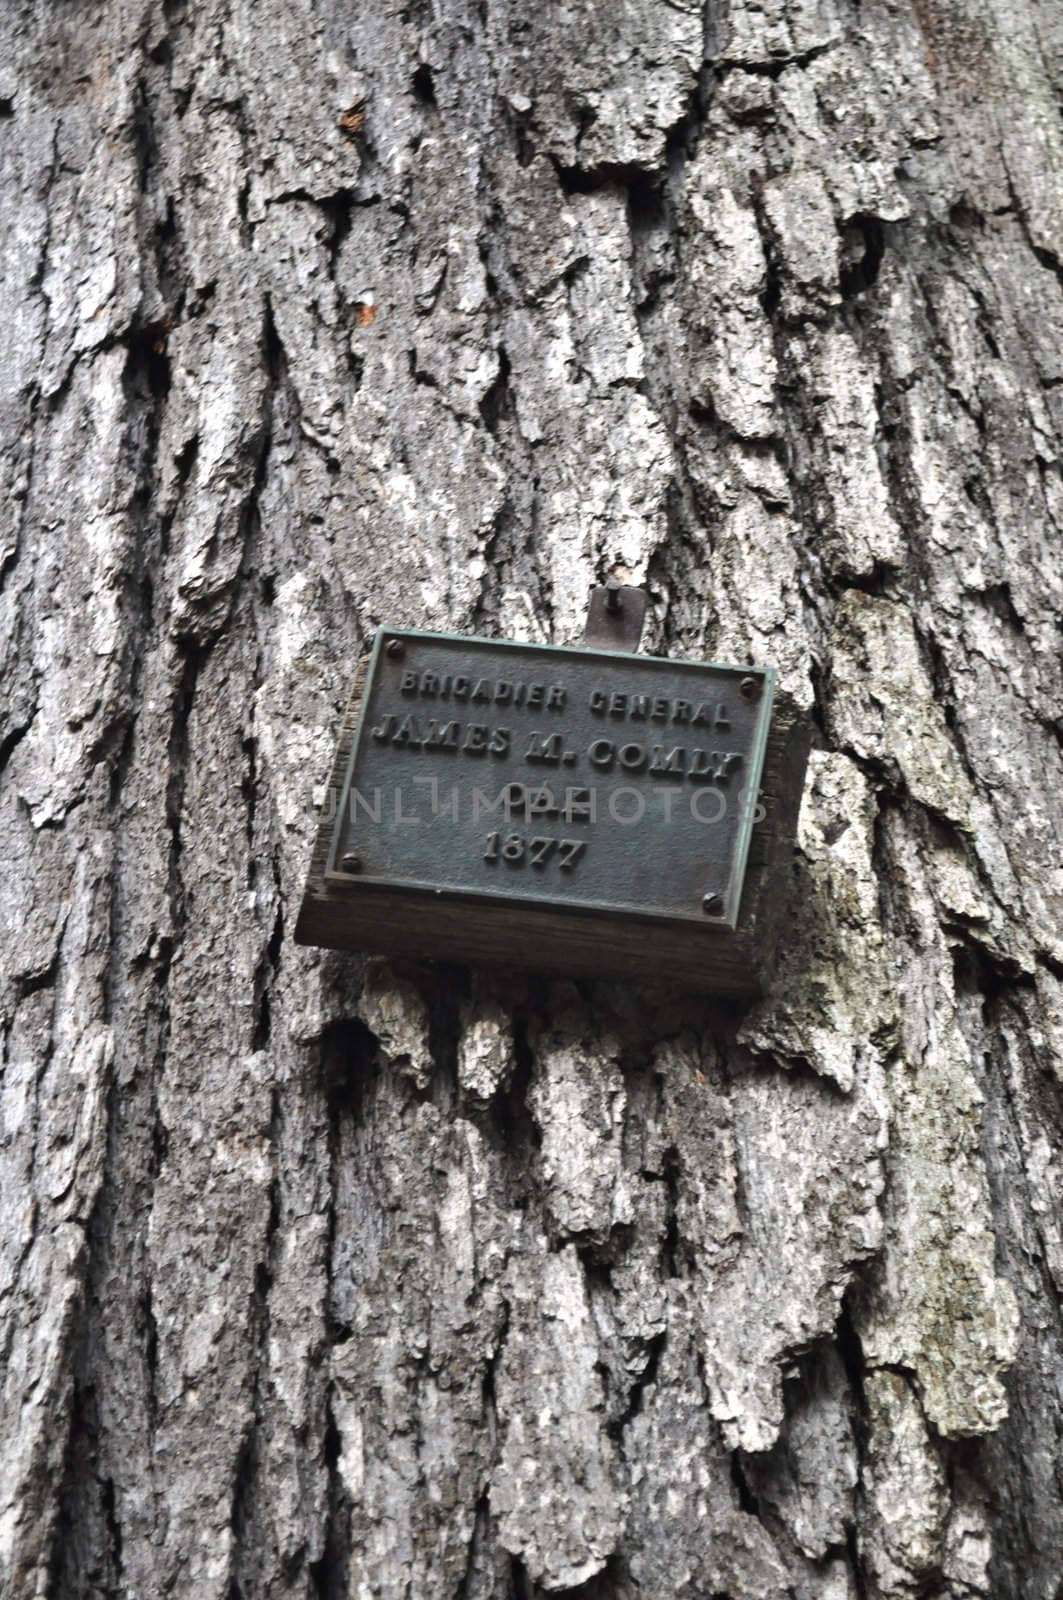 Tree - Brigadier General James Comly oak 1877 by RefocusPhoto